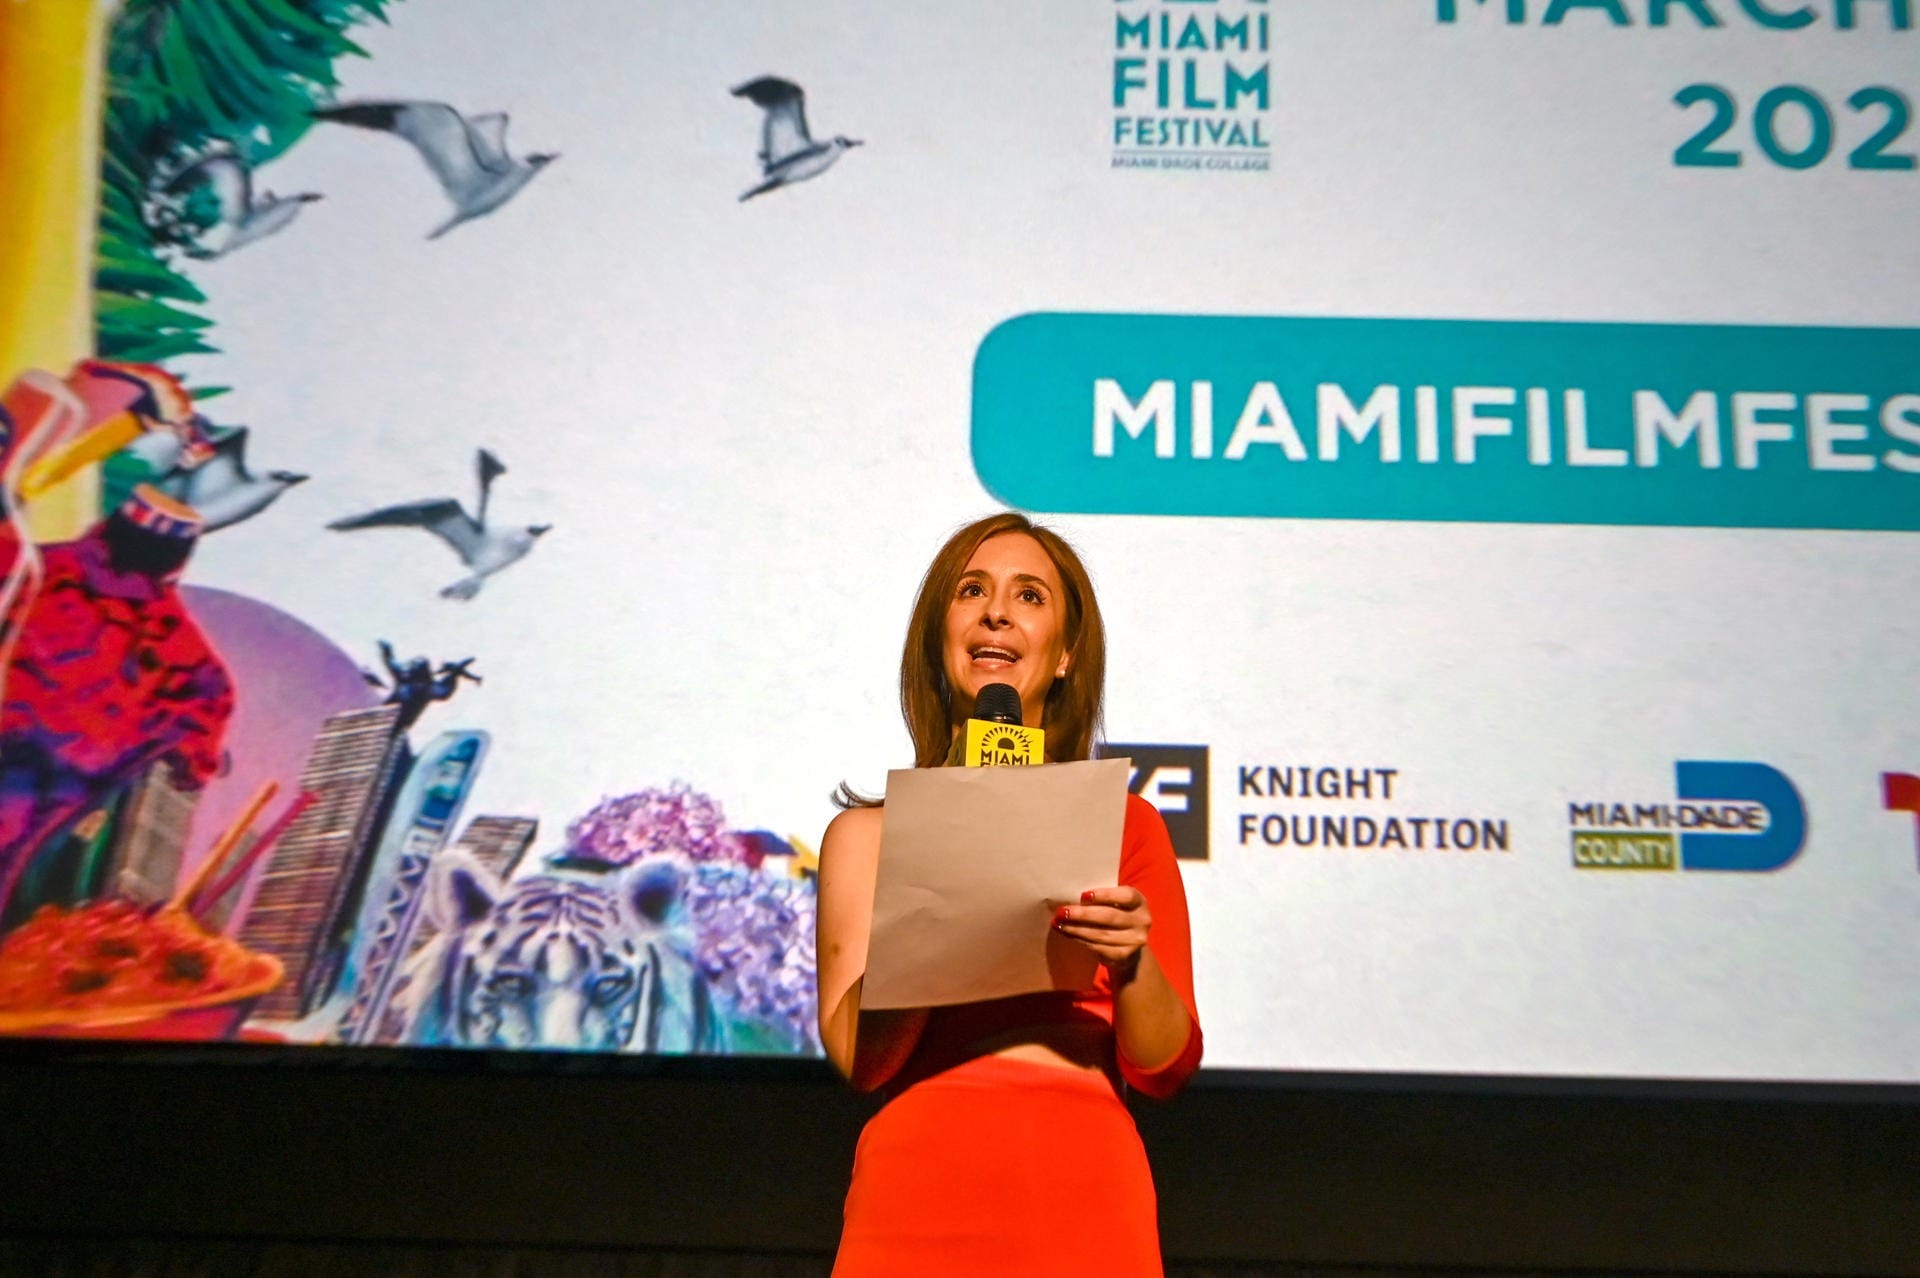 Festival de Miami celebra sus 40 años como vitrina del cine iberoamericano